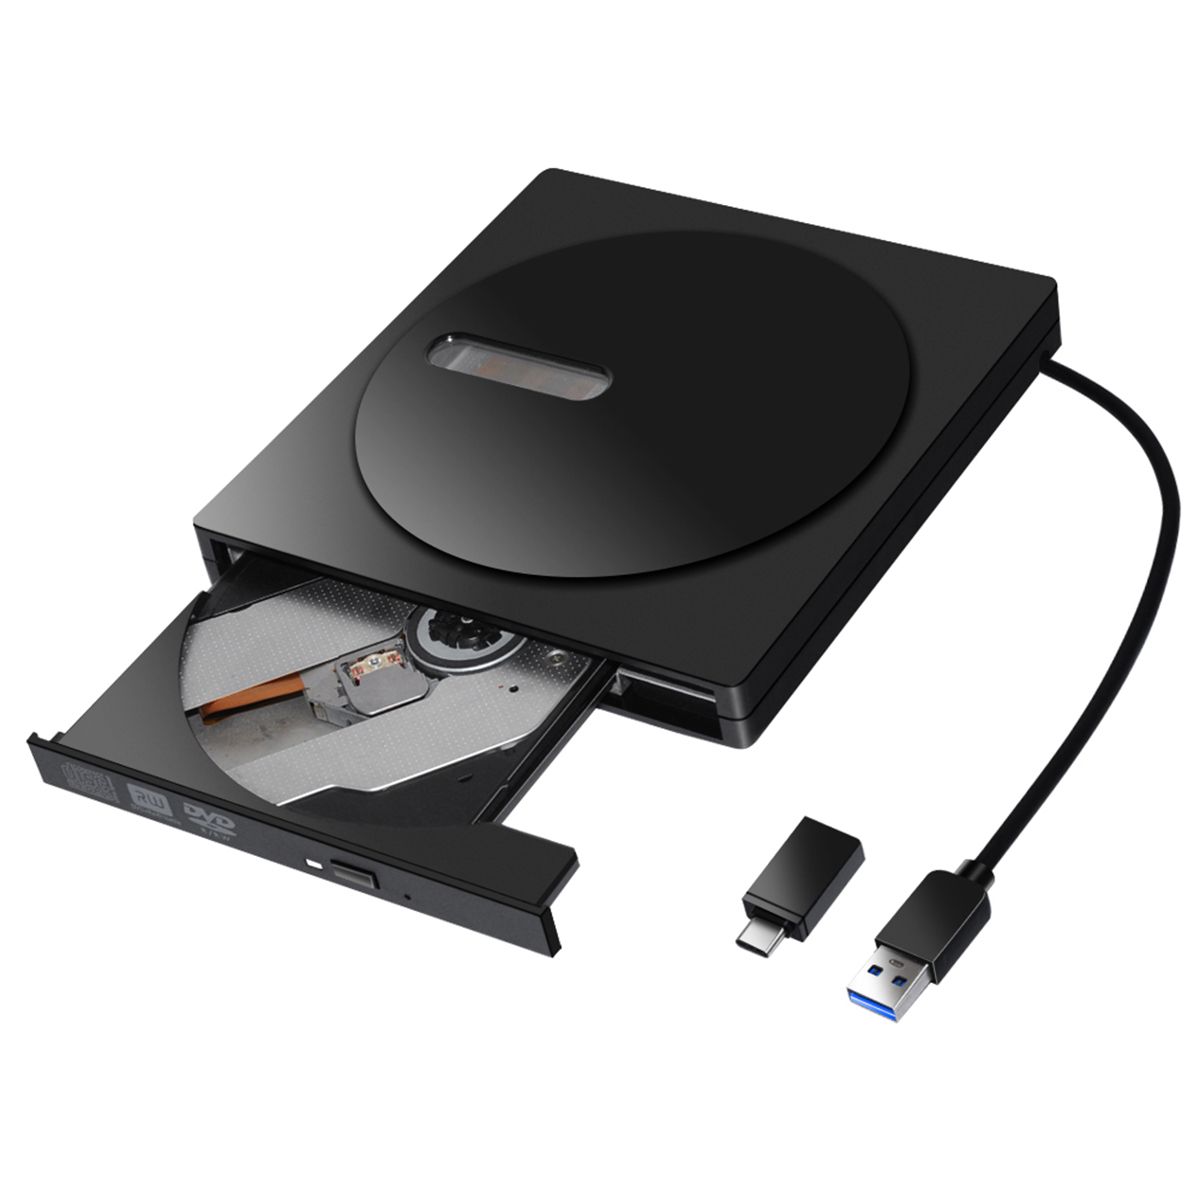 USB-30-Type-C-External-Optical-Drive-DVD-RW-Player-CD-DVD-Burner-Writer-Rewriter-Data-Transfer-for-P-1753078